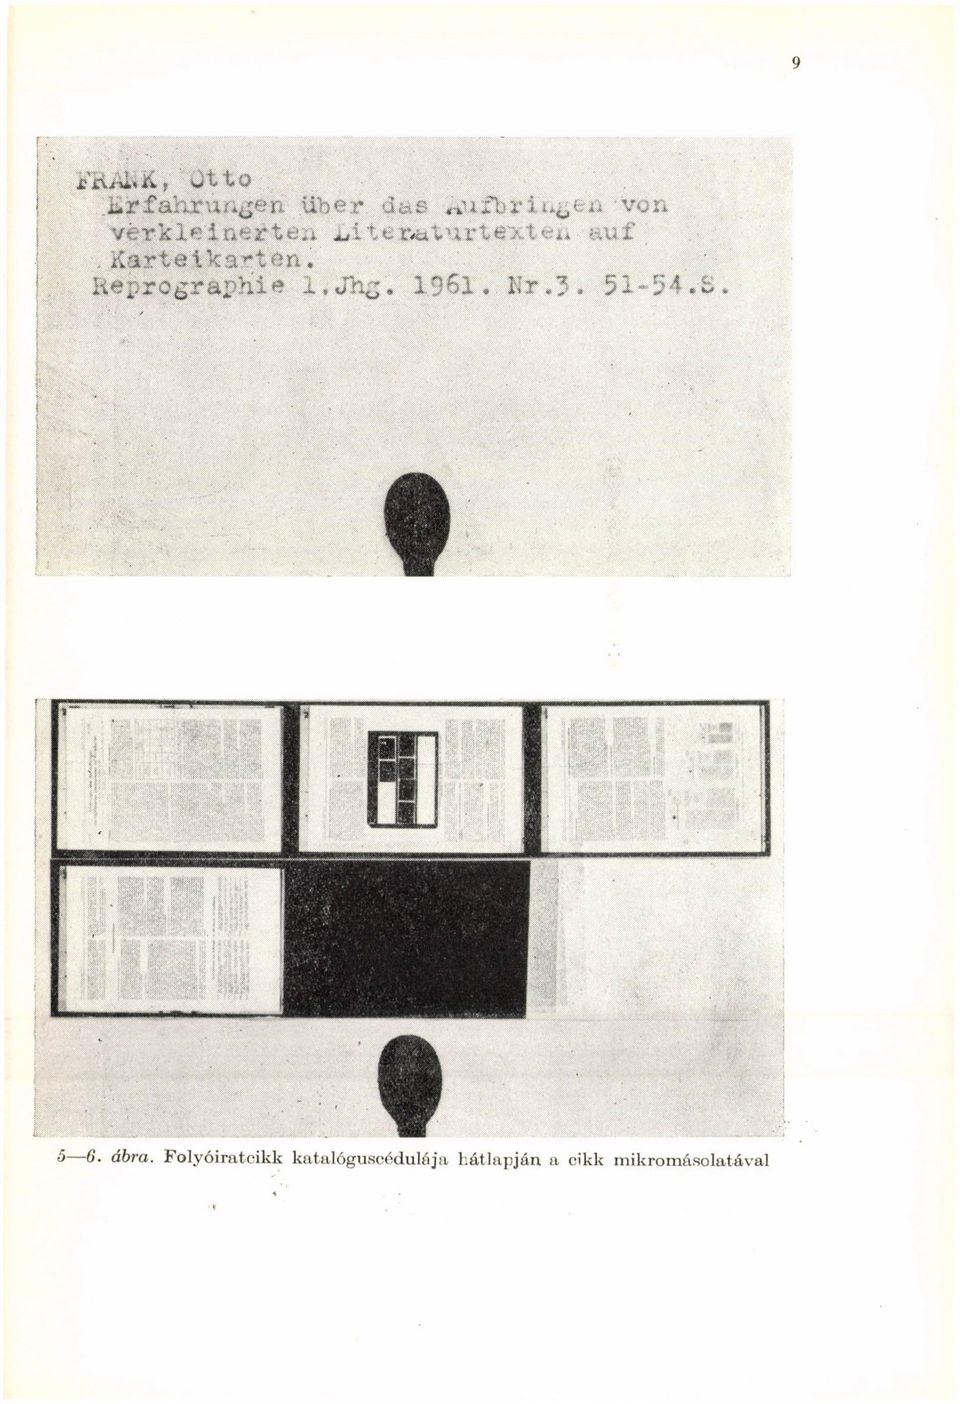 Kart-ei-karten. Repro^raphie l.ohg, 1961, Kr.3.